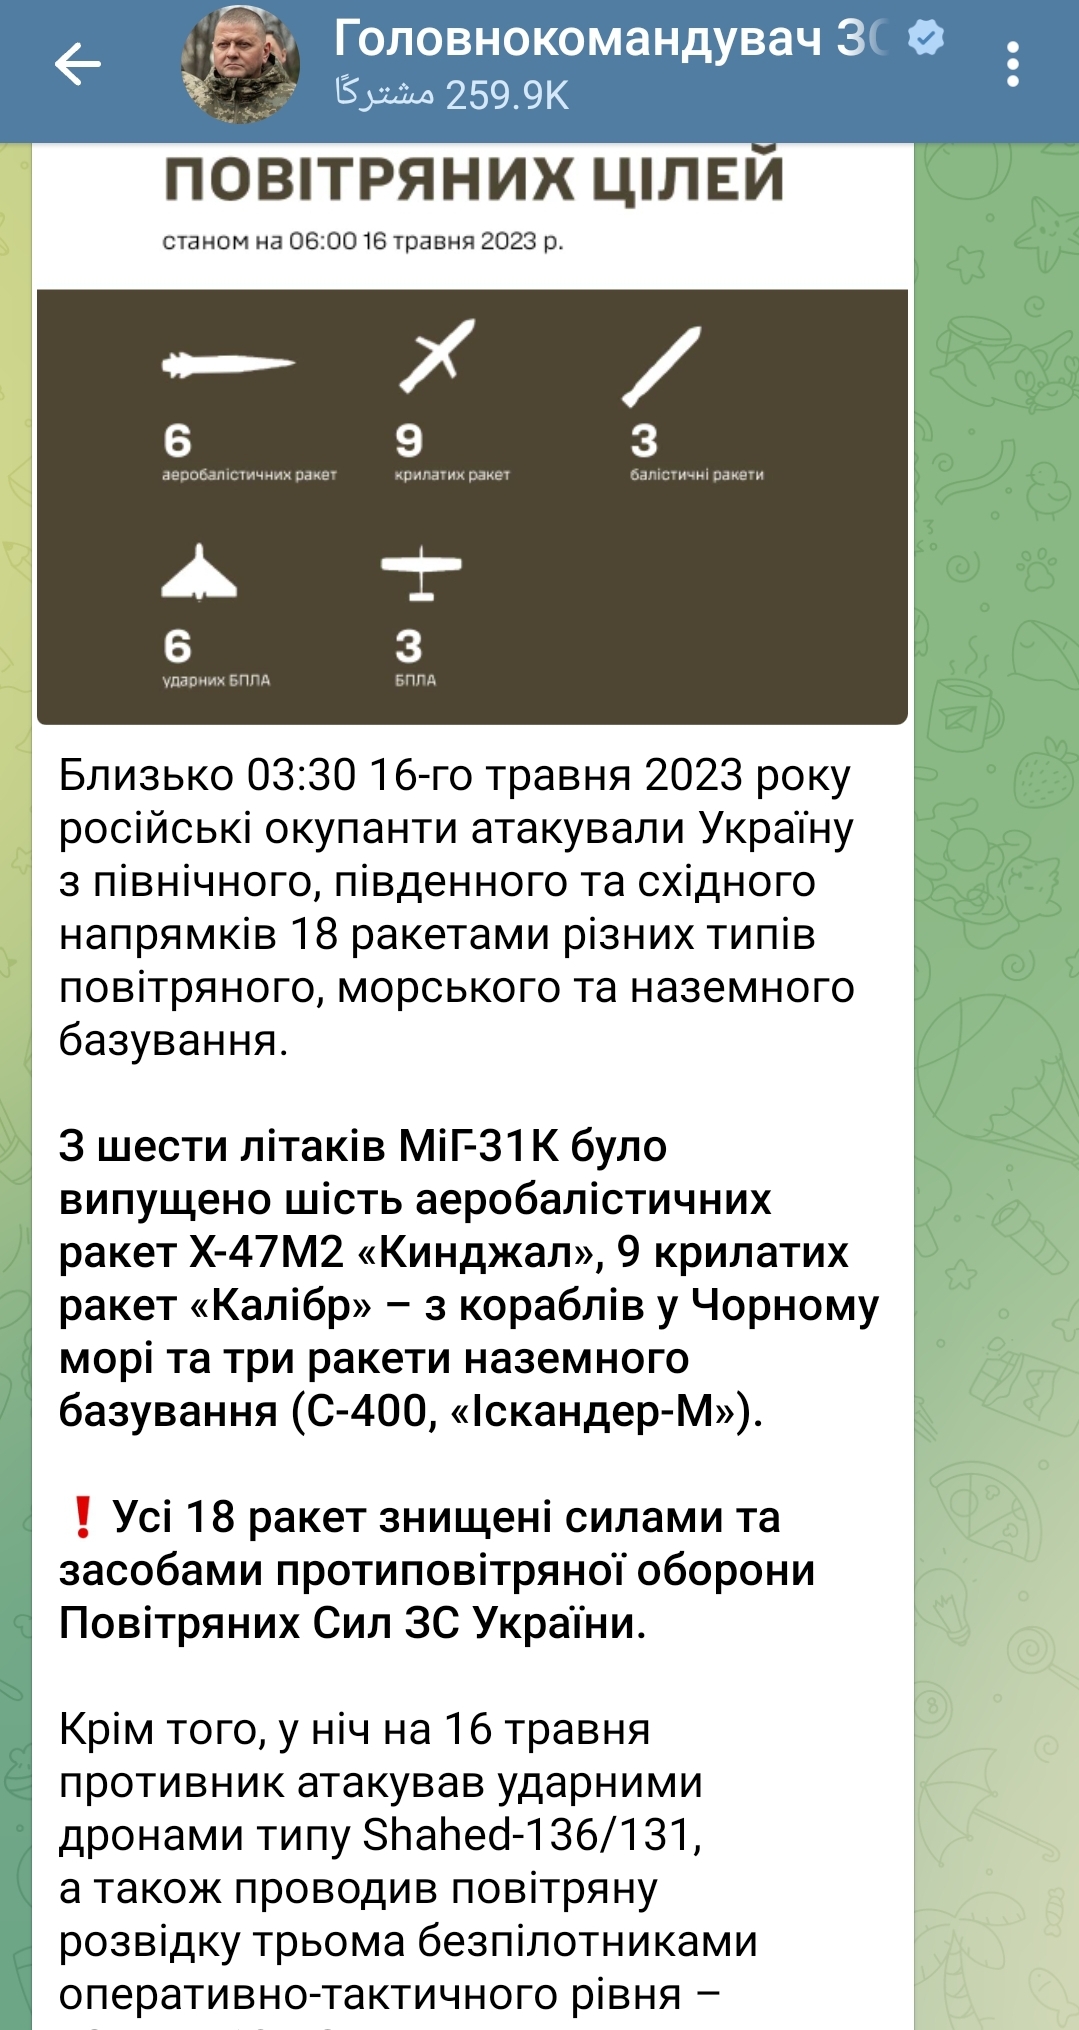 Screenshot_٢٠٢٣٠٥١٦_٠٩٤٢١٨_Telegram.jpg